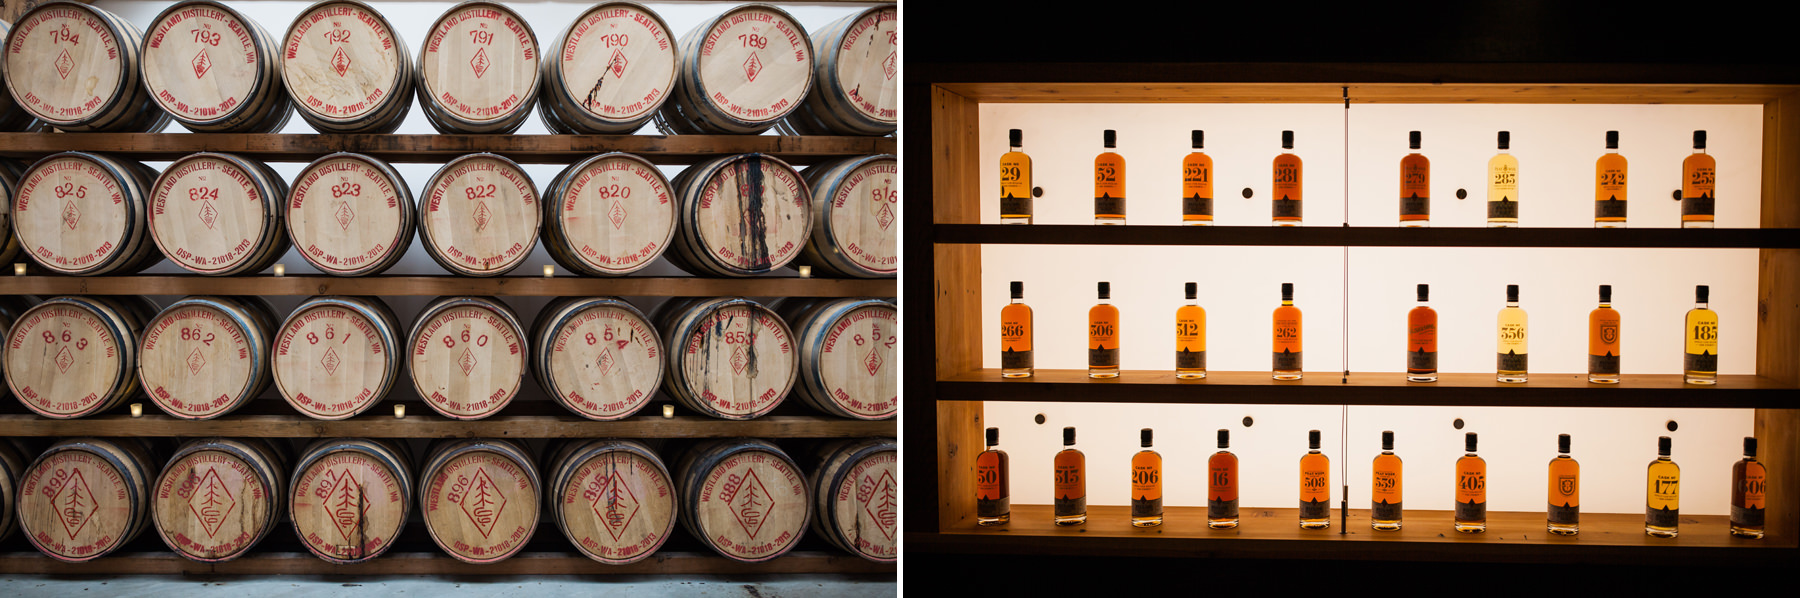 064-whiskey-and-barrels-at-westland-distillery-in-seattle-washington.jpg